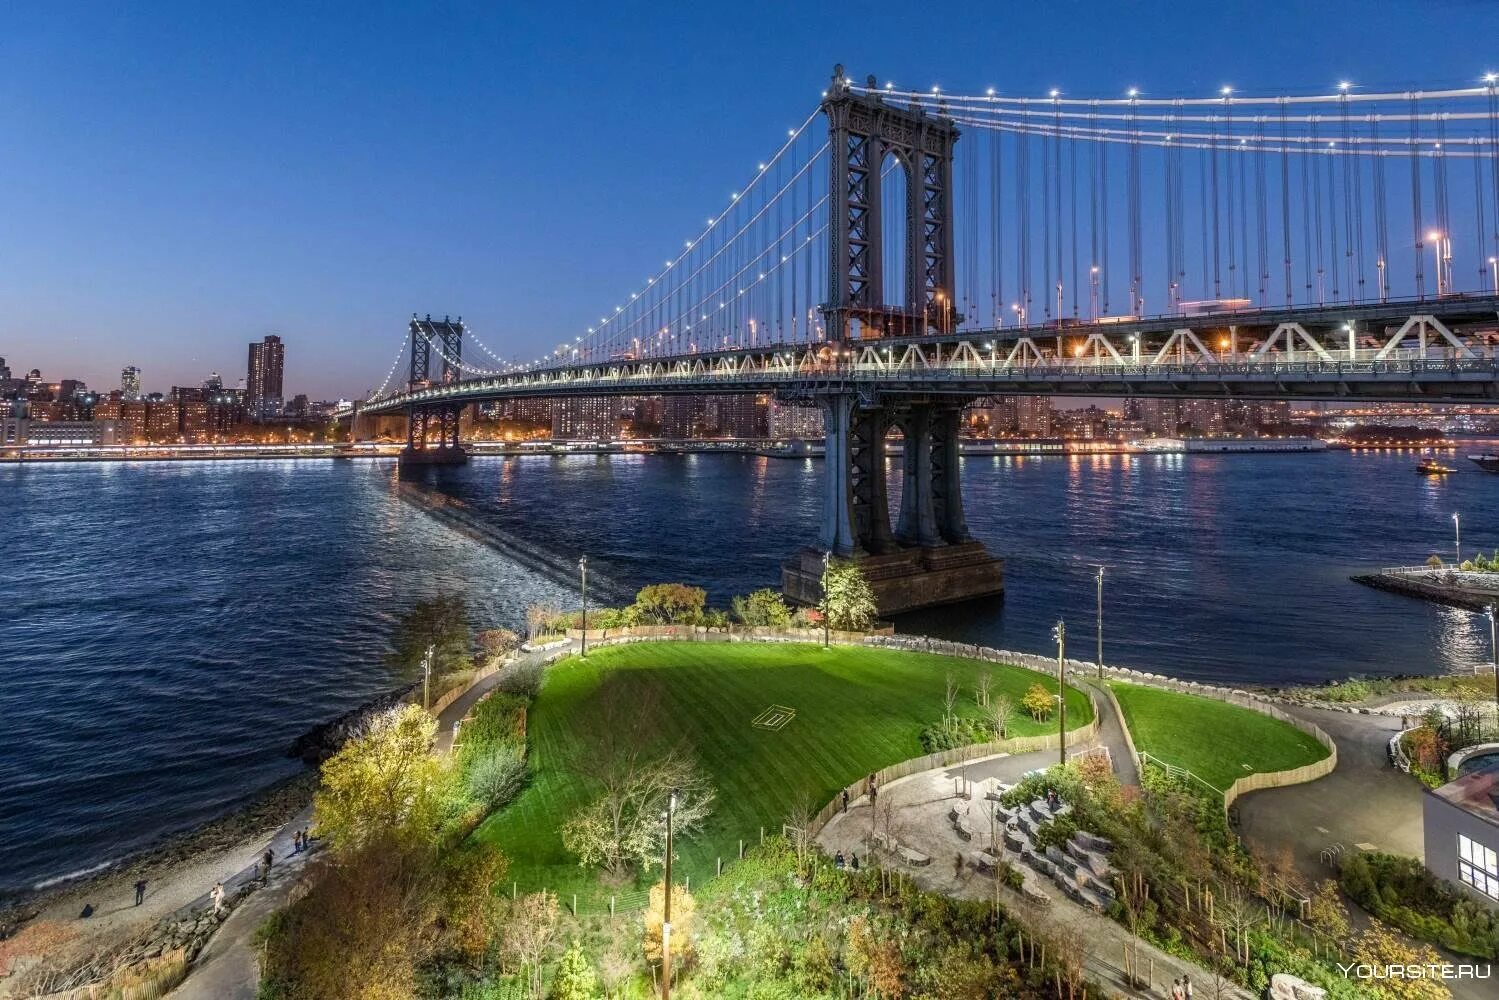 Бруклин мост. Бруклинский мост Нью-Йорк. Бруклин бридж парк. Парк Бруклинского моста Нью-Йорк. Америка мост Бруклин.